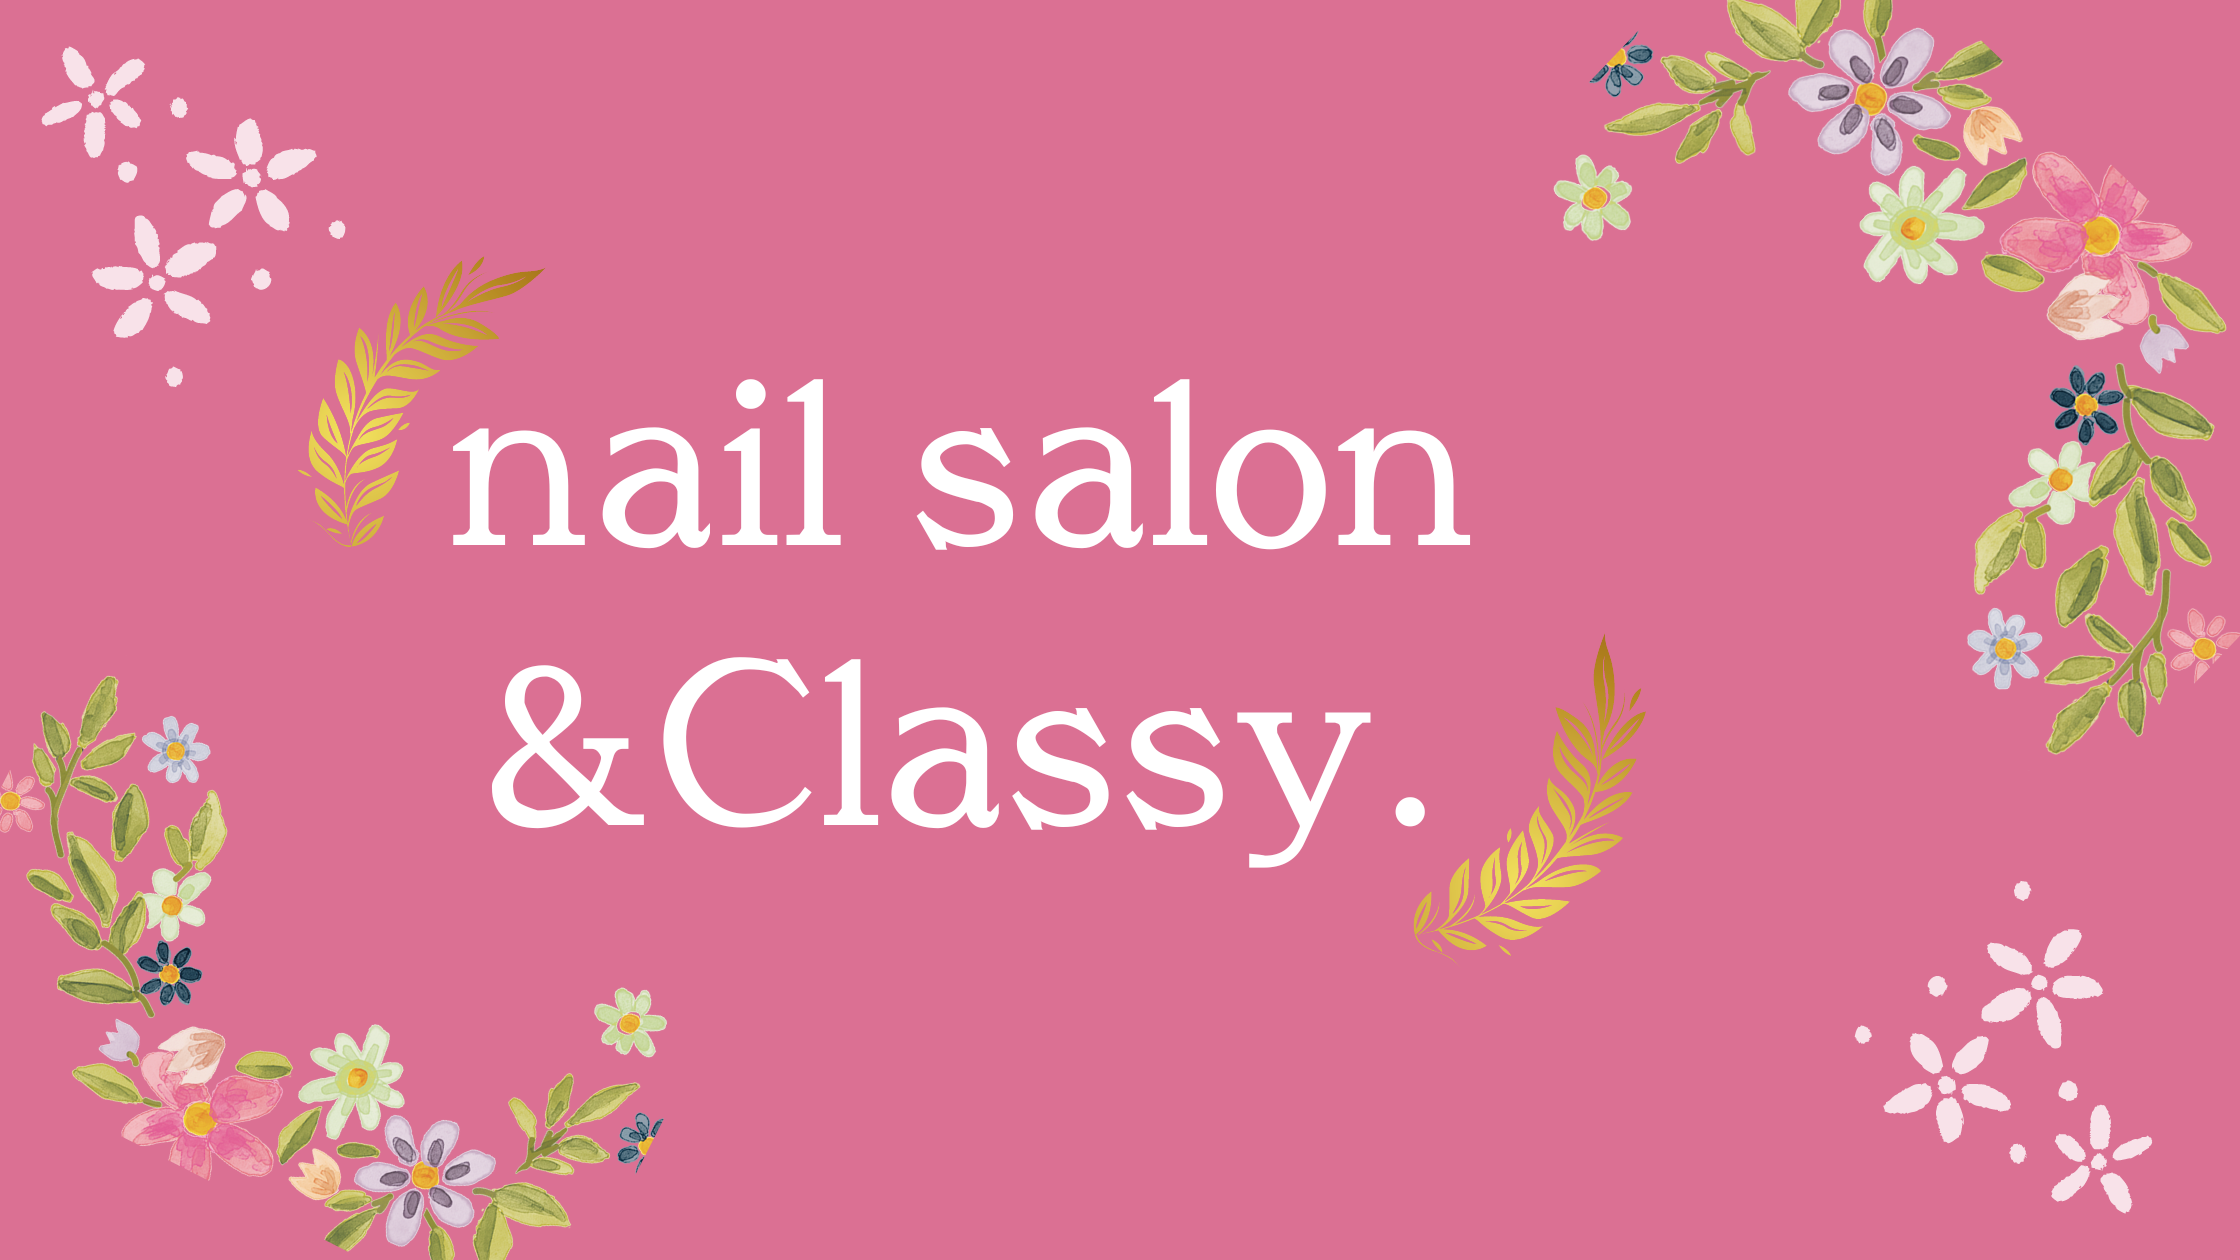 nail salon &Classy